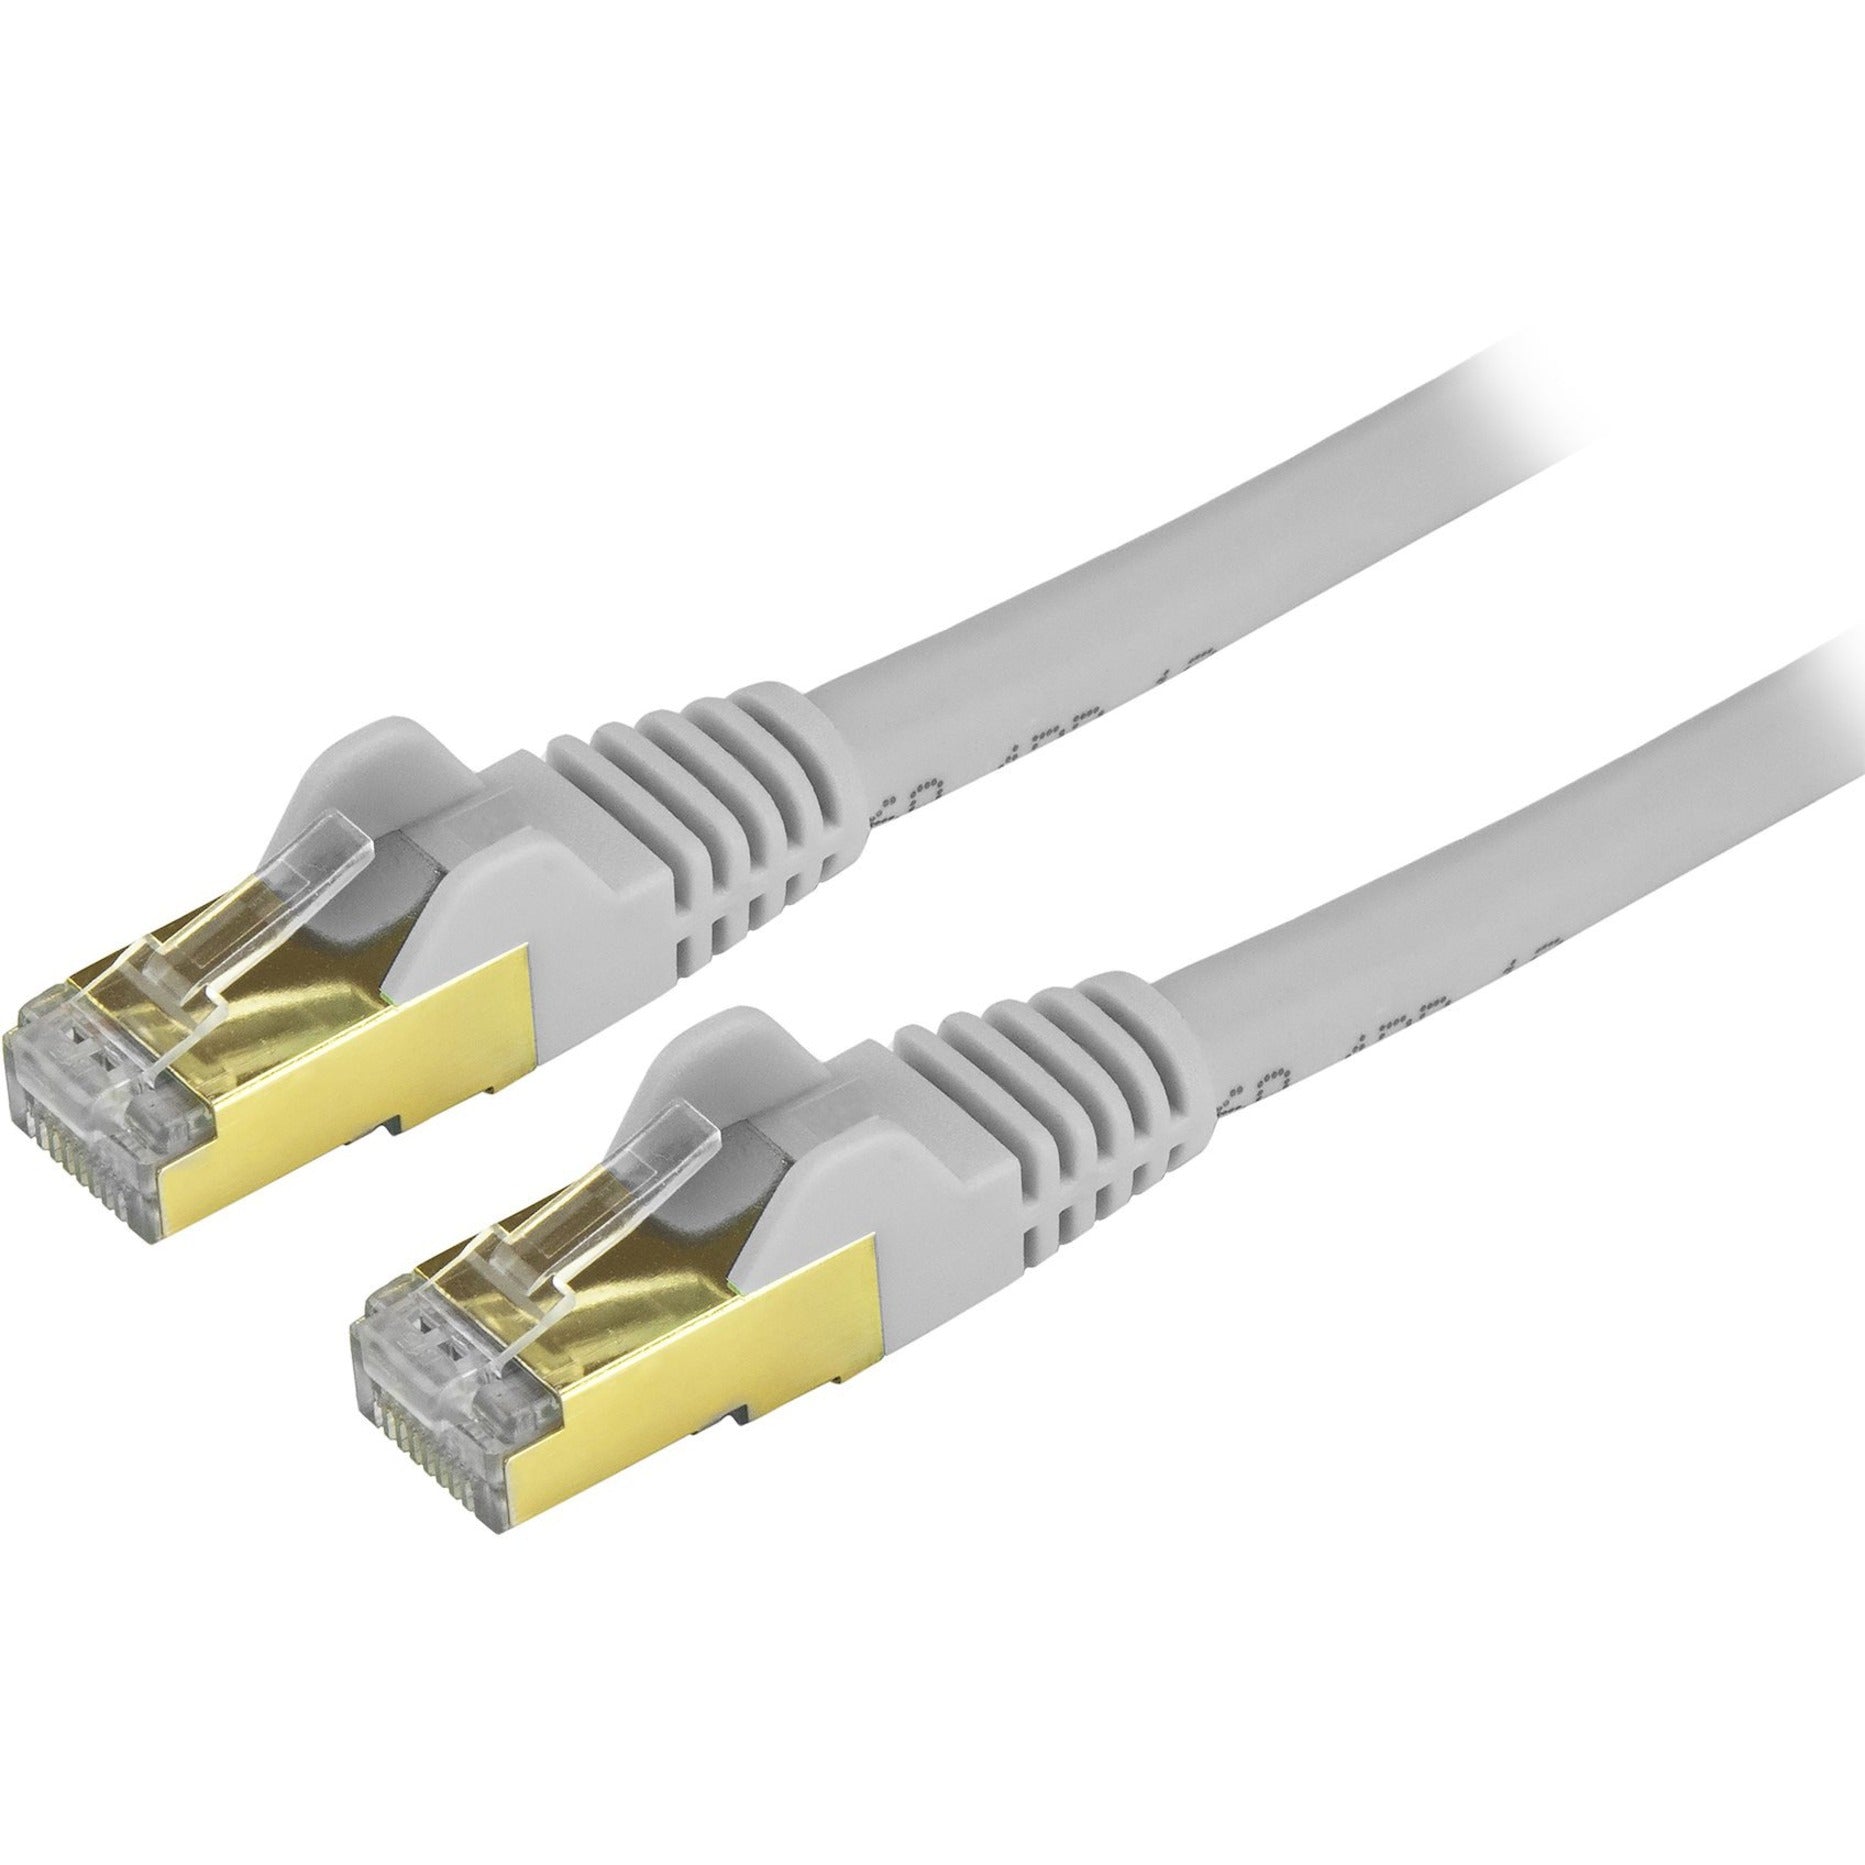 StarTech.com C6ASPAT6GR Cat6a Ethernet Patch Cable - Shielded (STP) - 6 ft., Gray, Snagless RJ45 Ethernet Cord